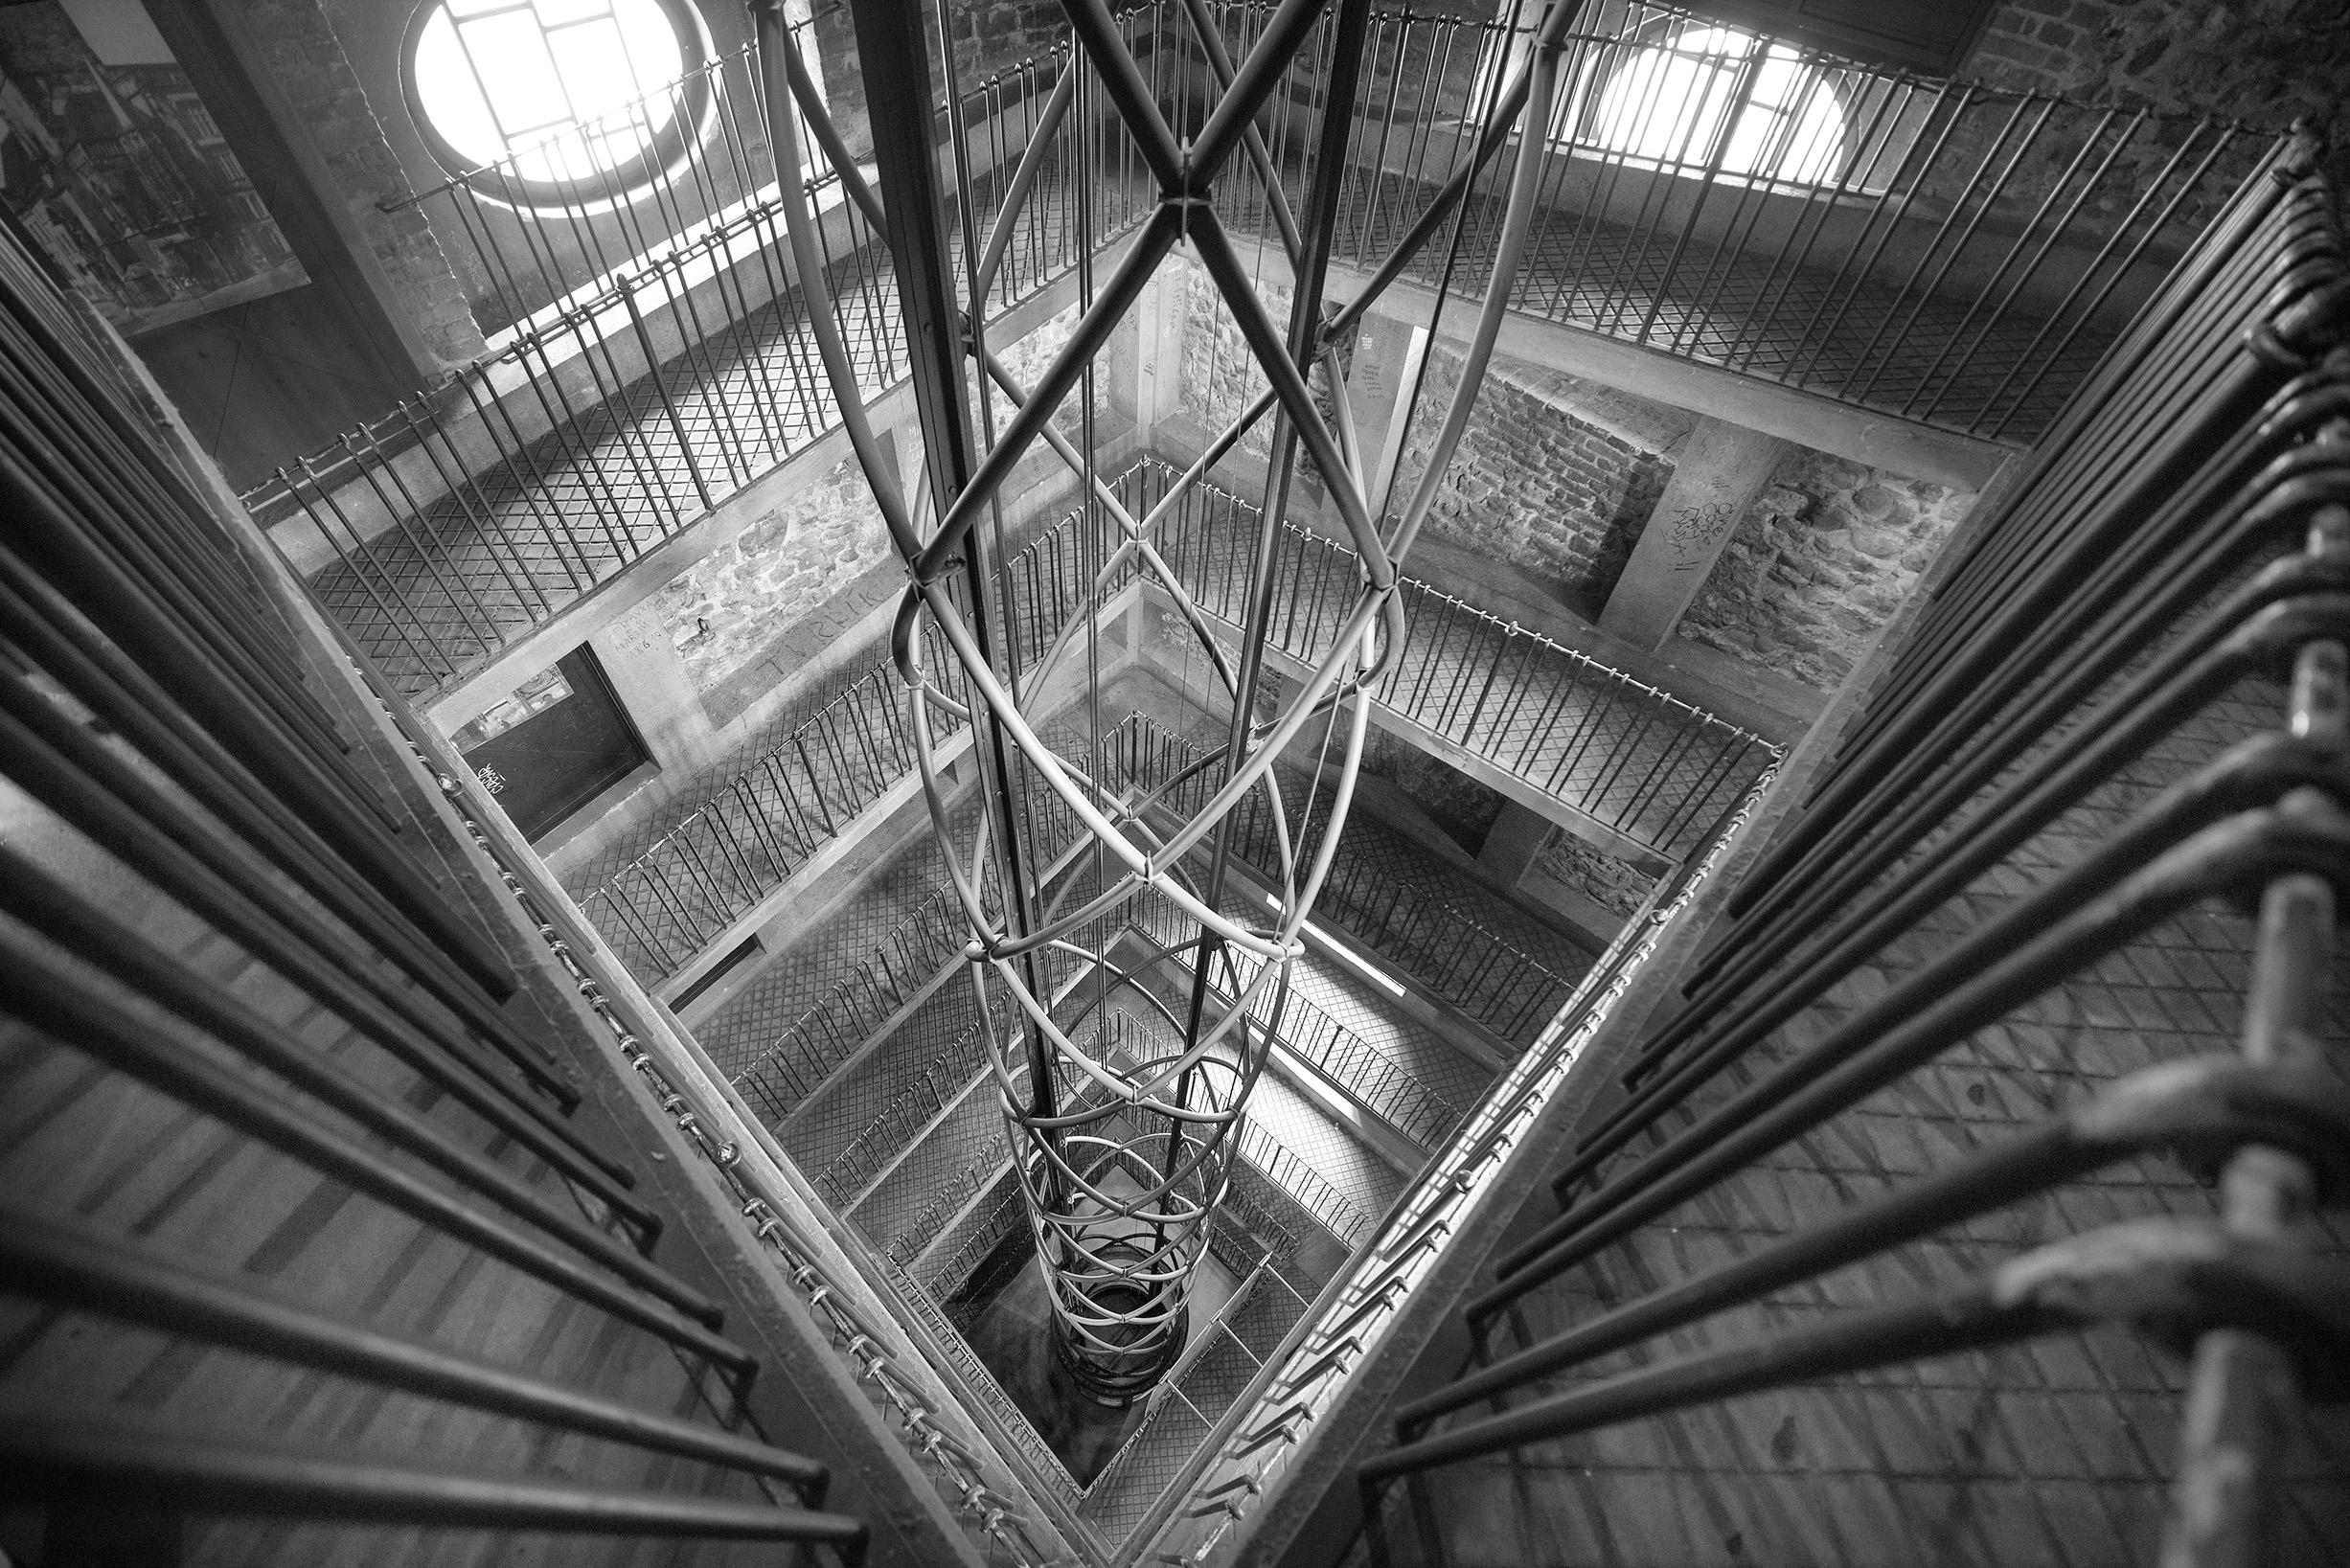 Inside the Old Market Tower in Black & White © Harold Davis